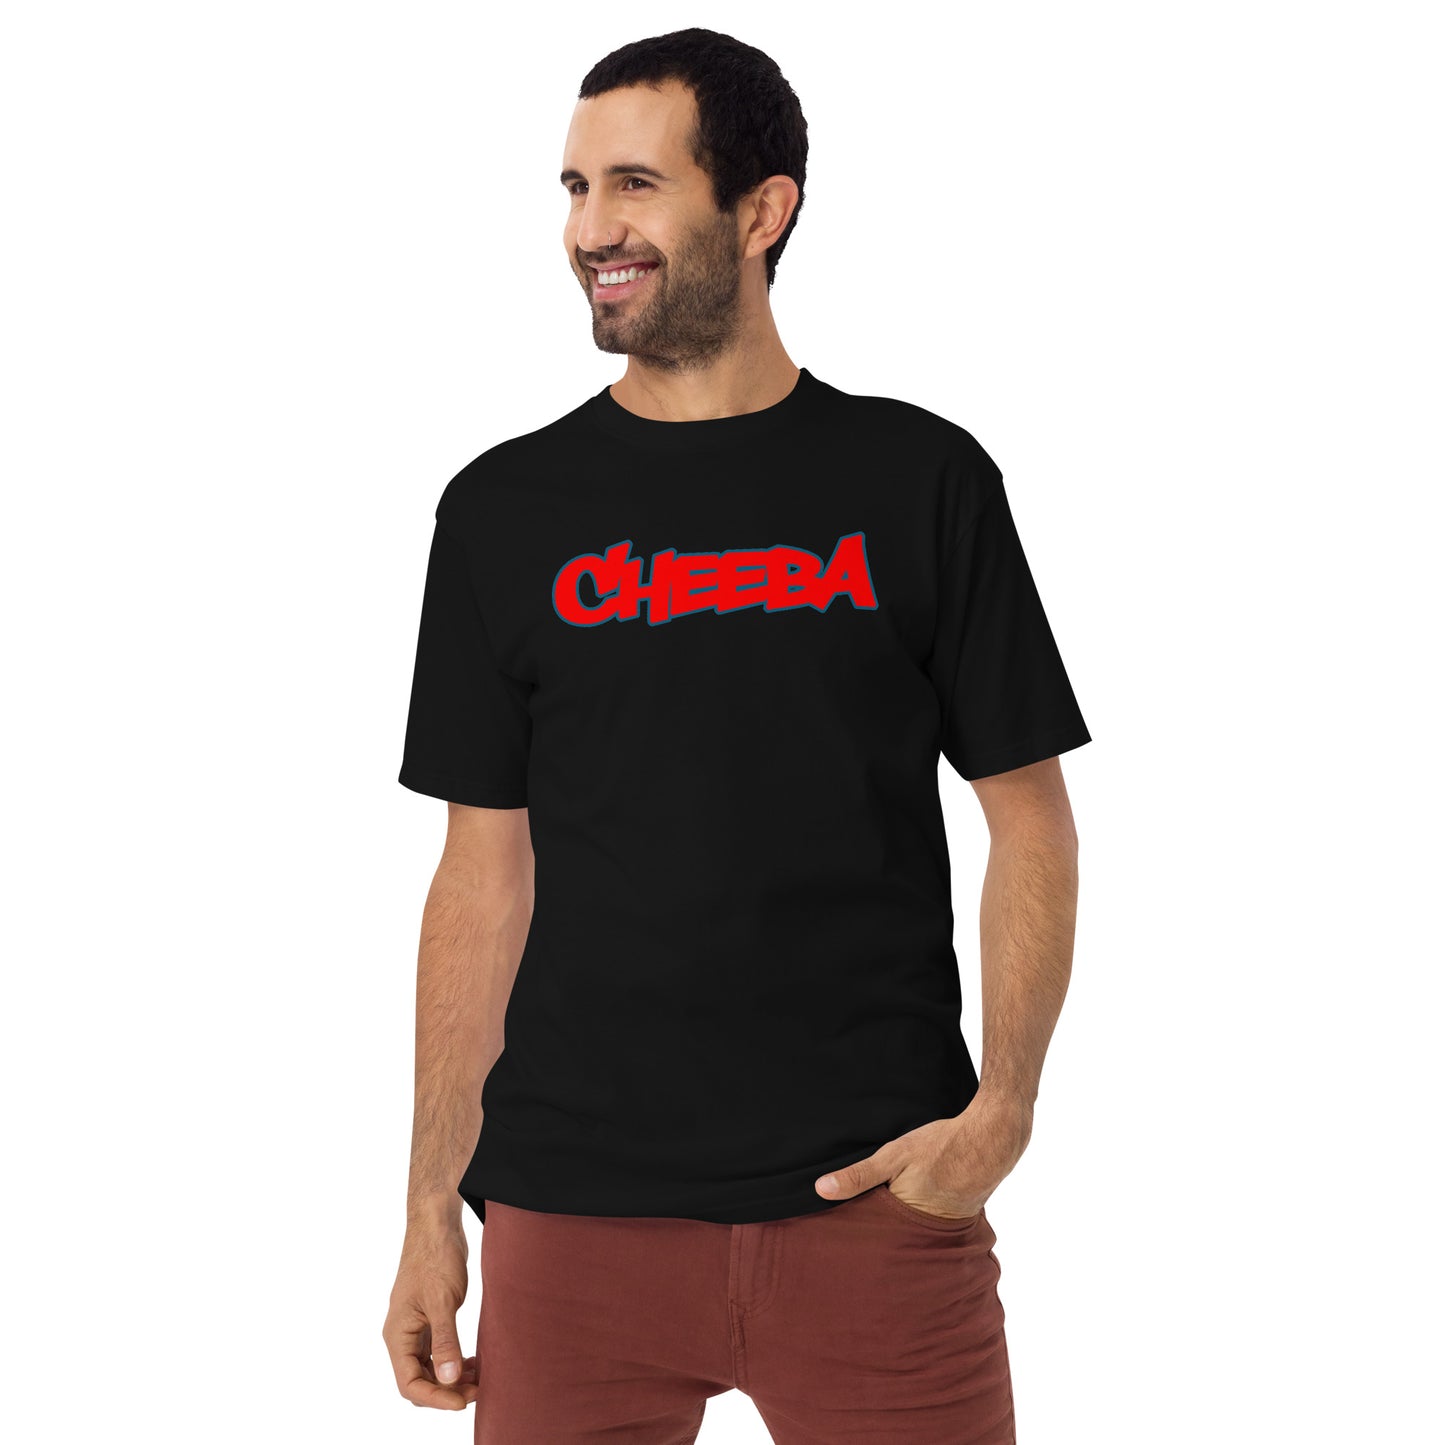 Cheeba Edition Tee shirt